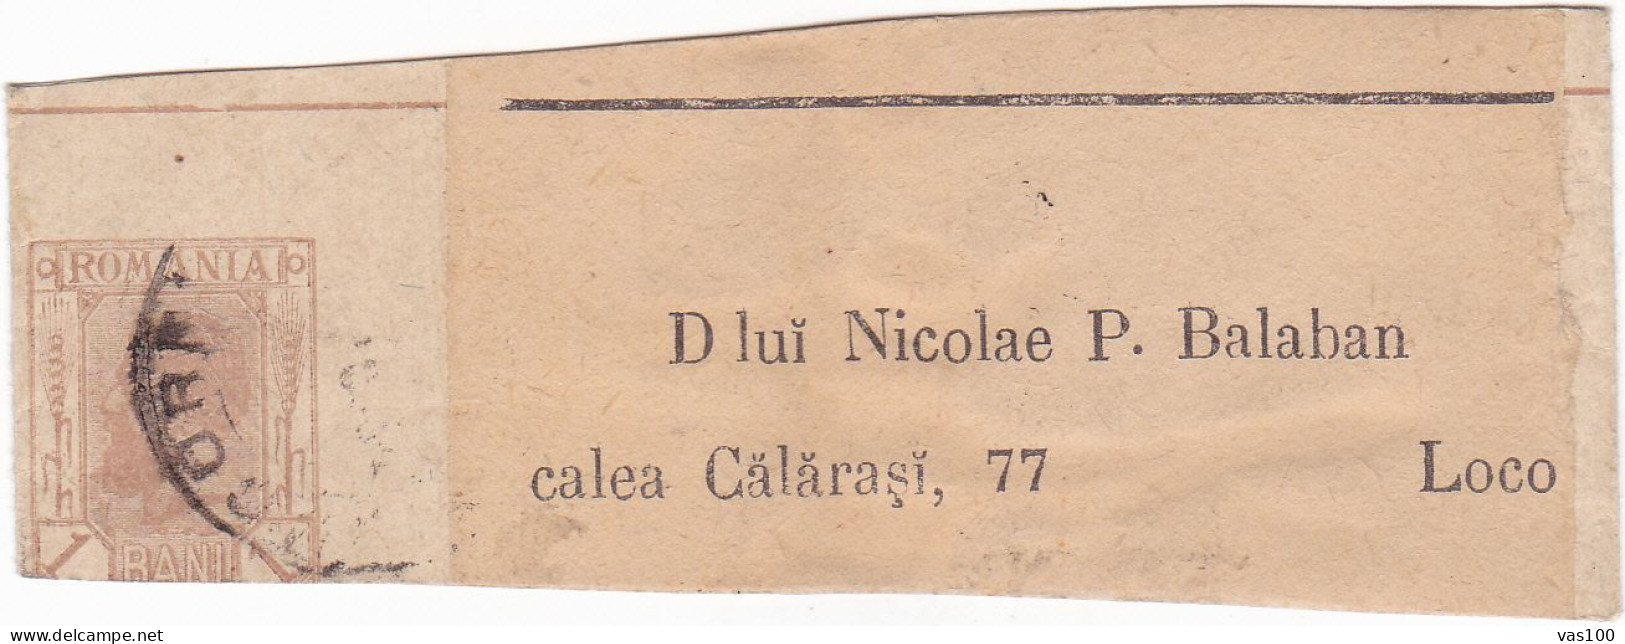 ROMANIA ROMÂNIA POSTAL STATIONERY,BAND NEWSPAPER WRAPPER 1900! - Lettres & Documents